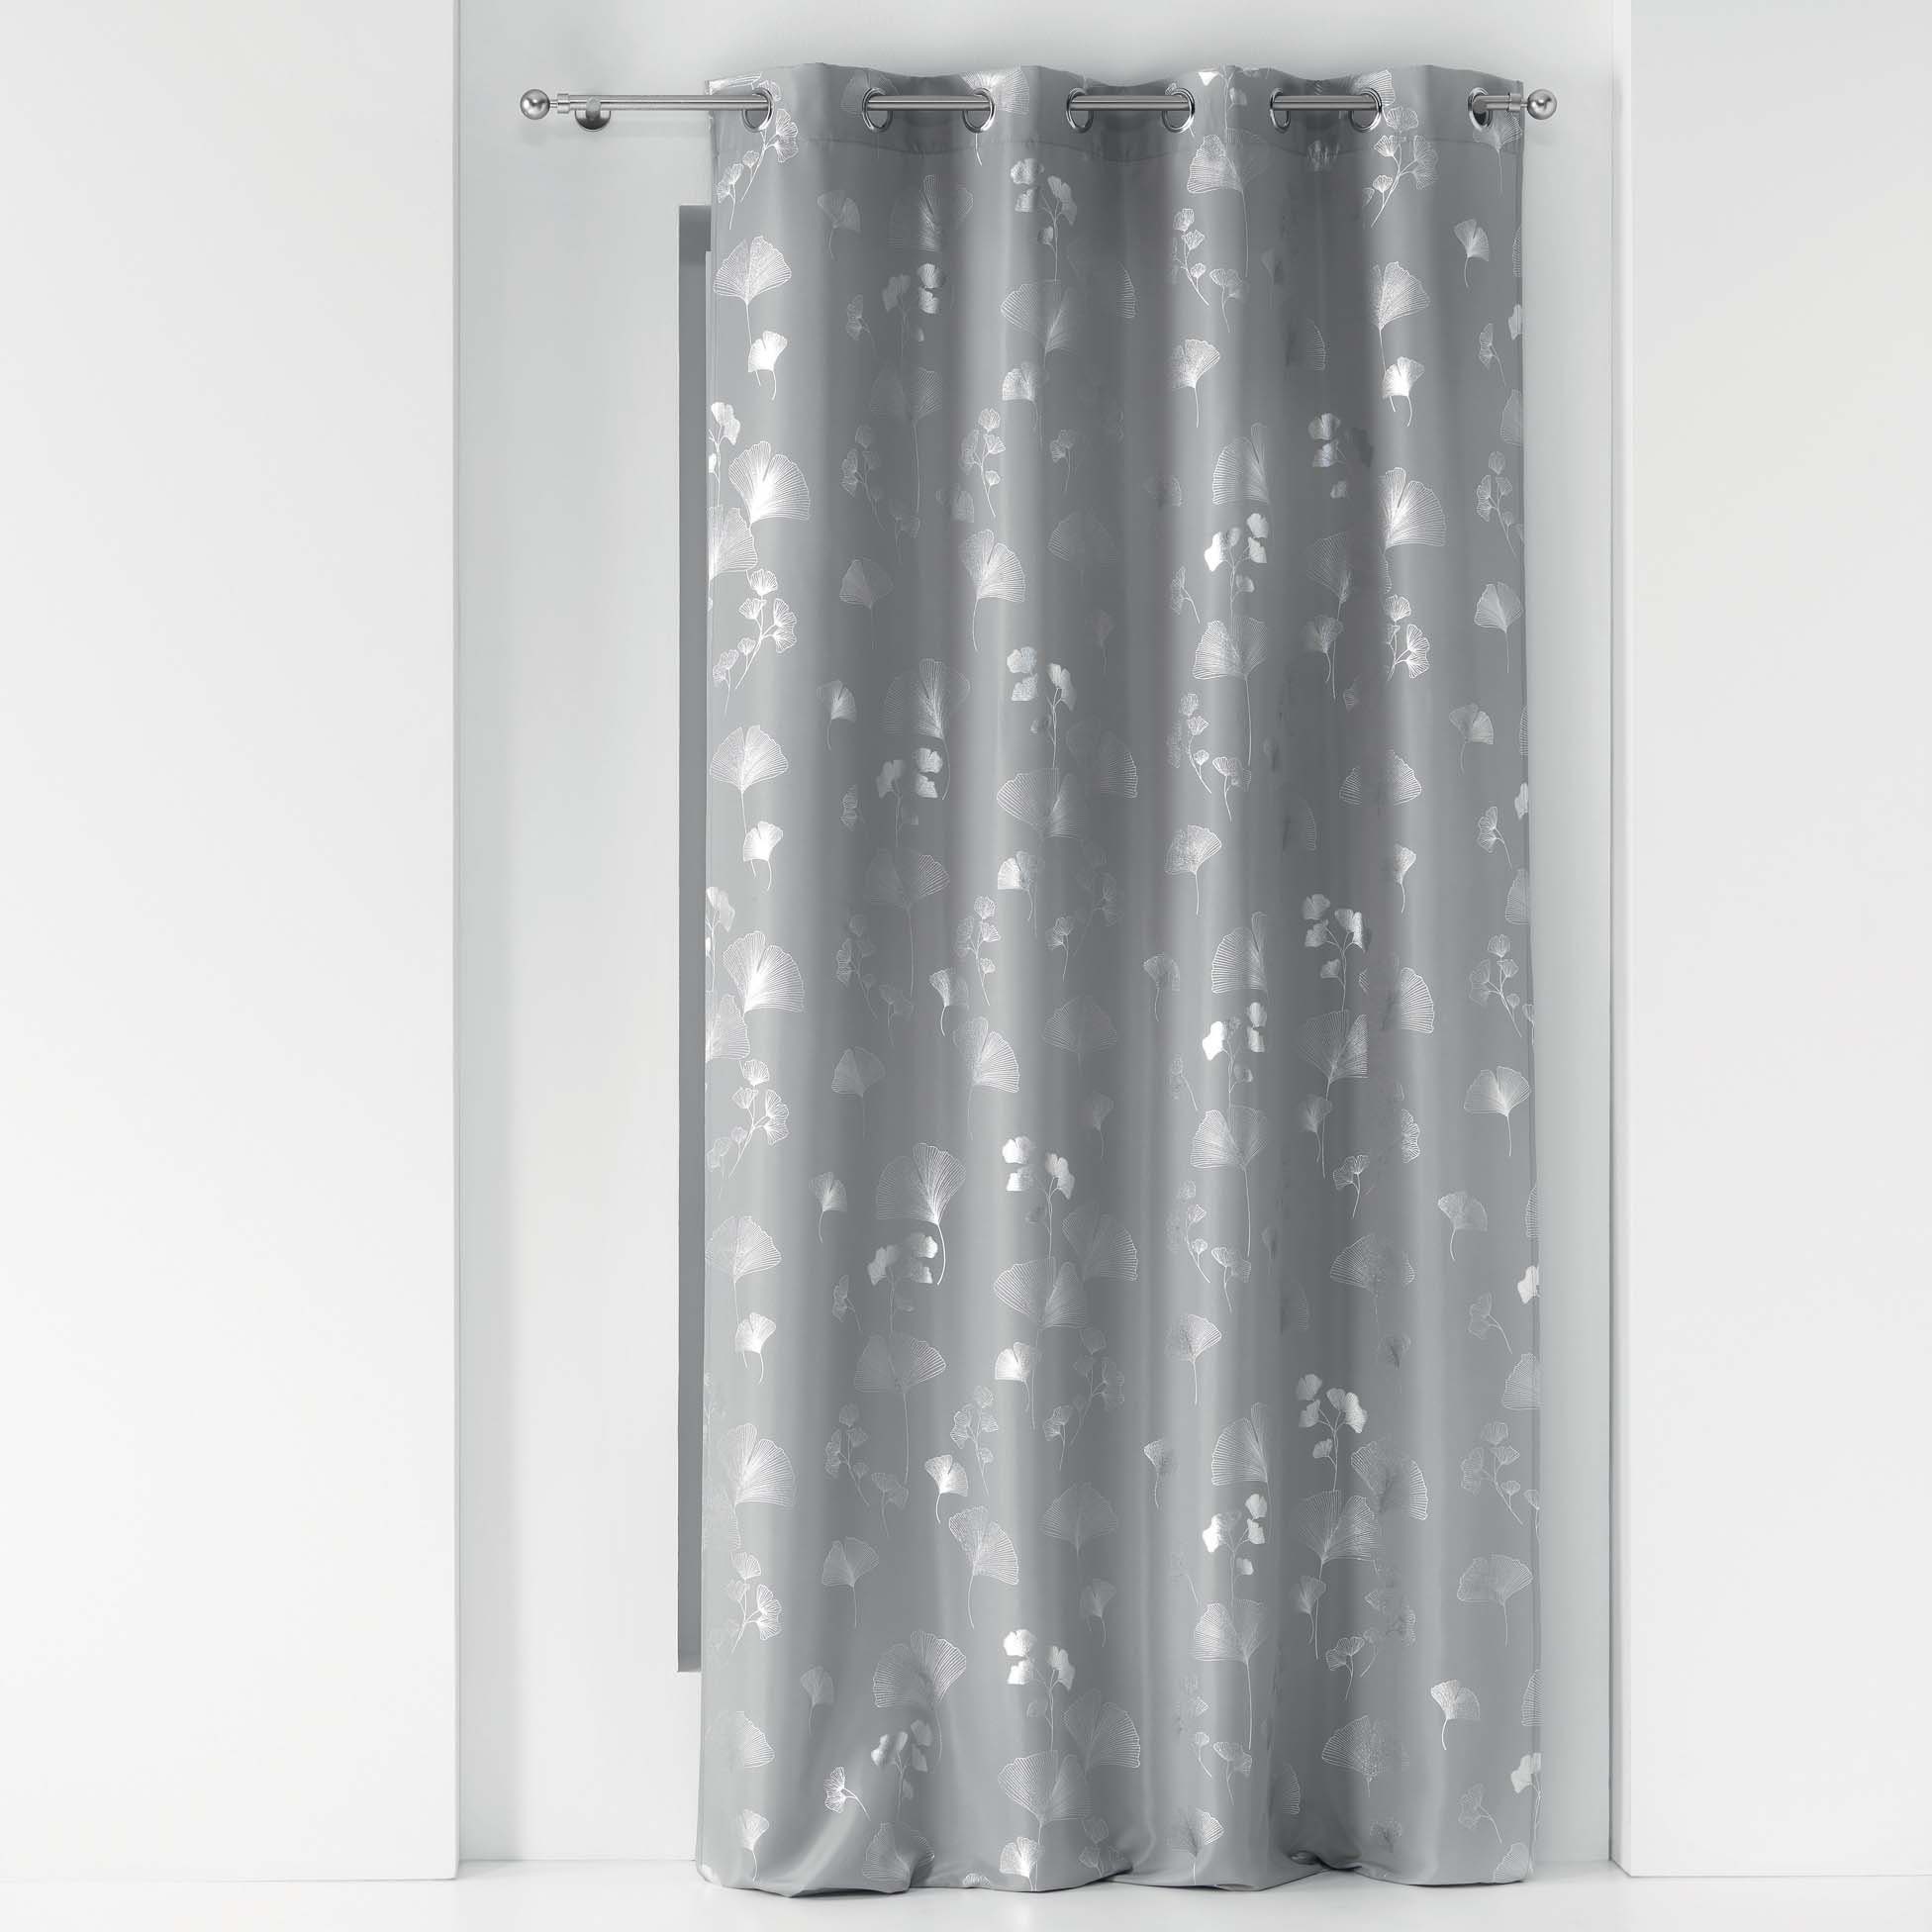 Blattdruck dynamic24, halbtransparent, grau silber Ösen, Ösenschal 140x260cm Vorhang, Vorhang